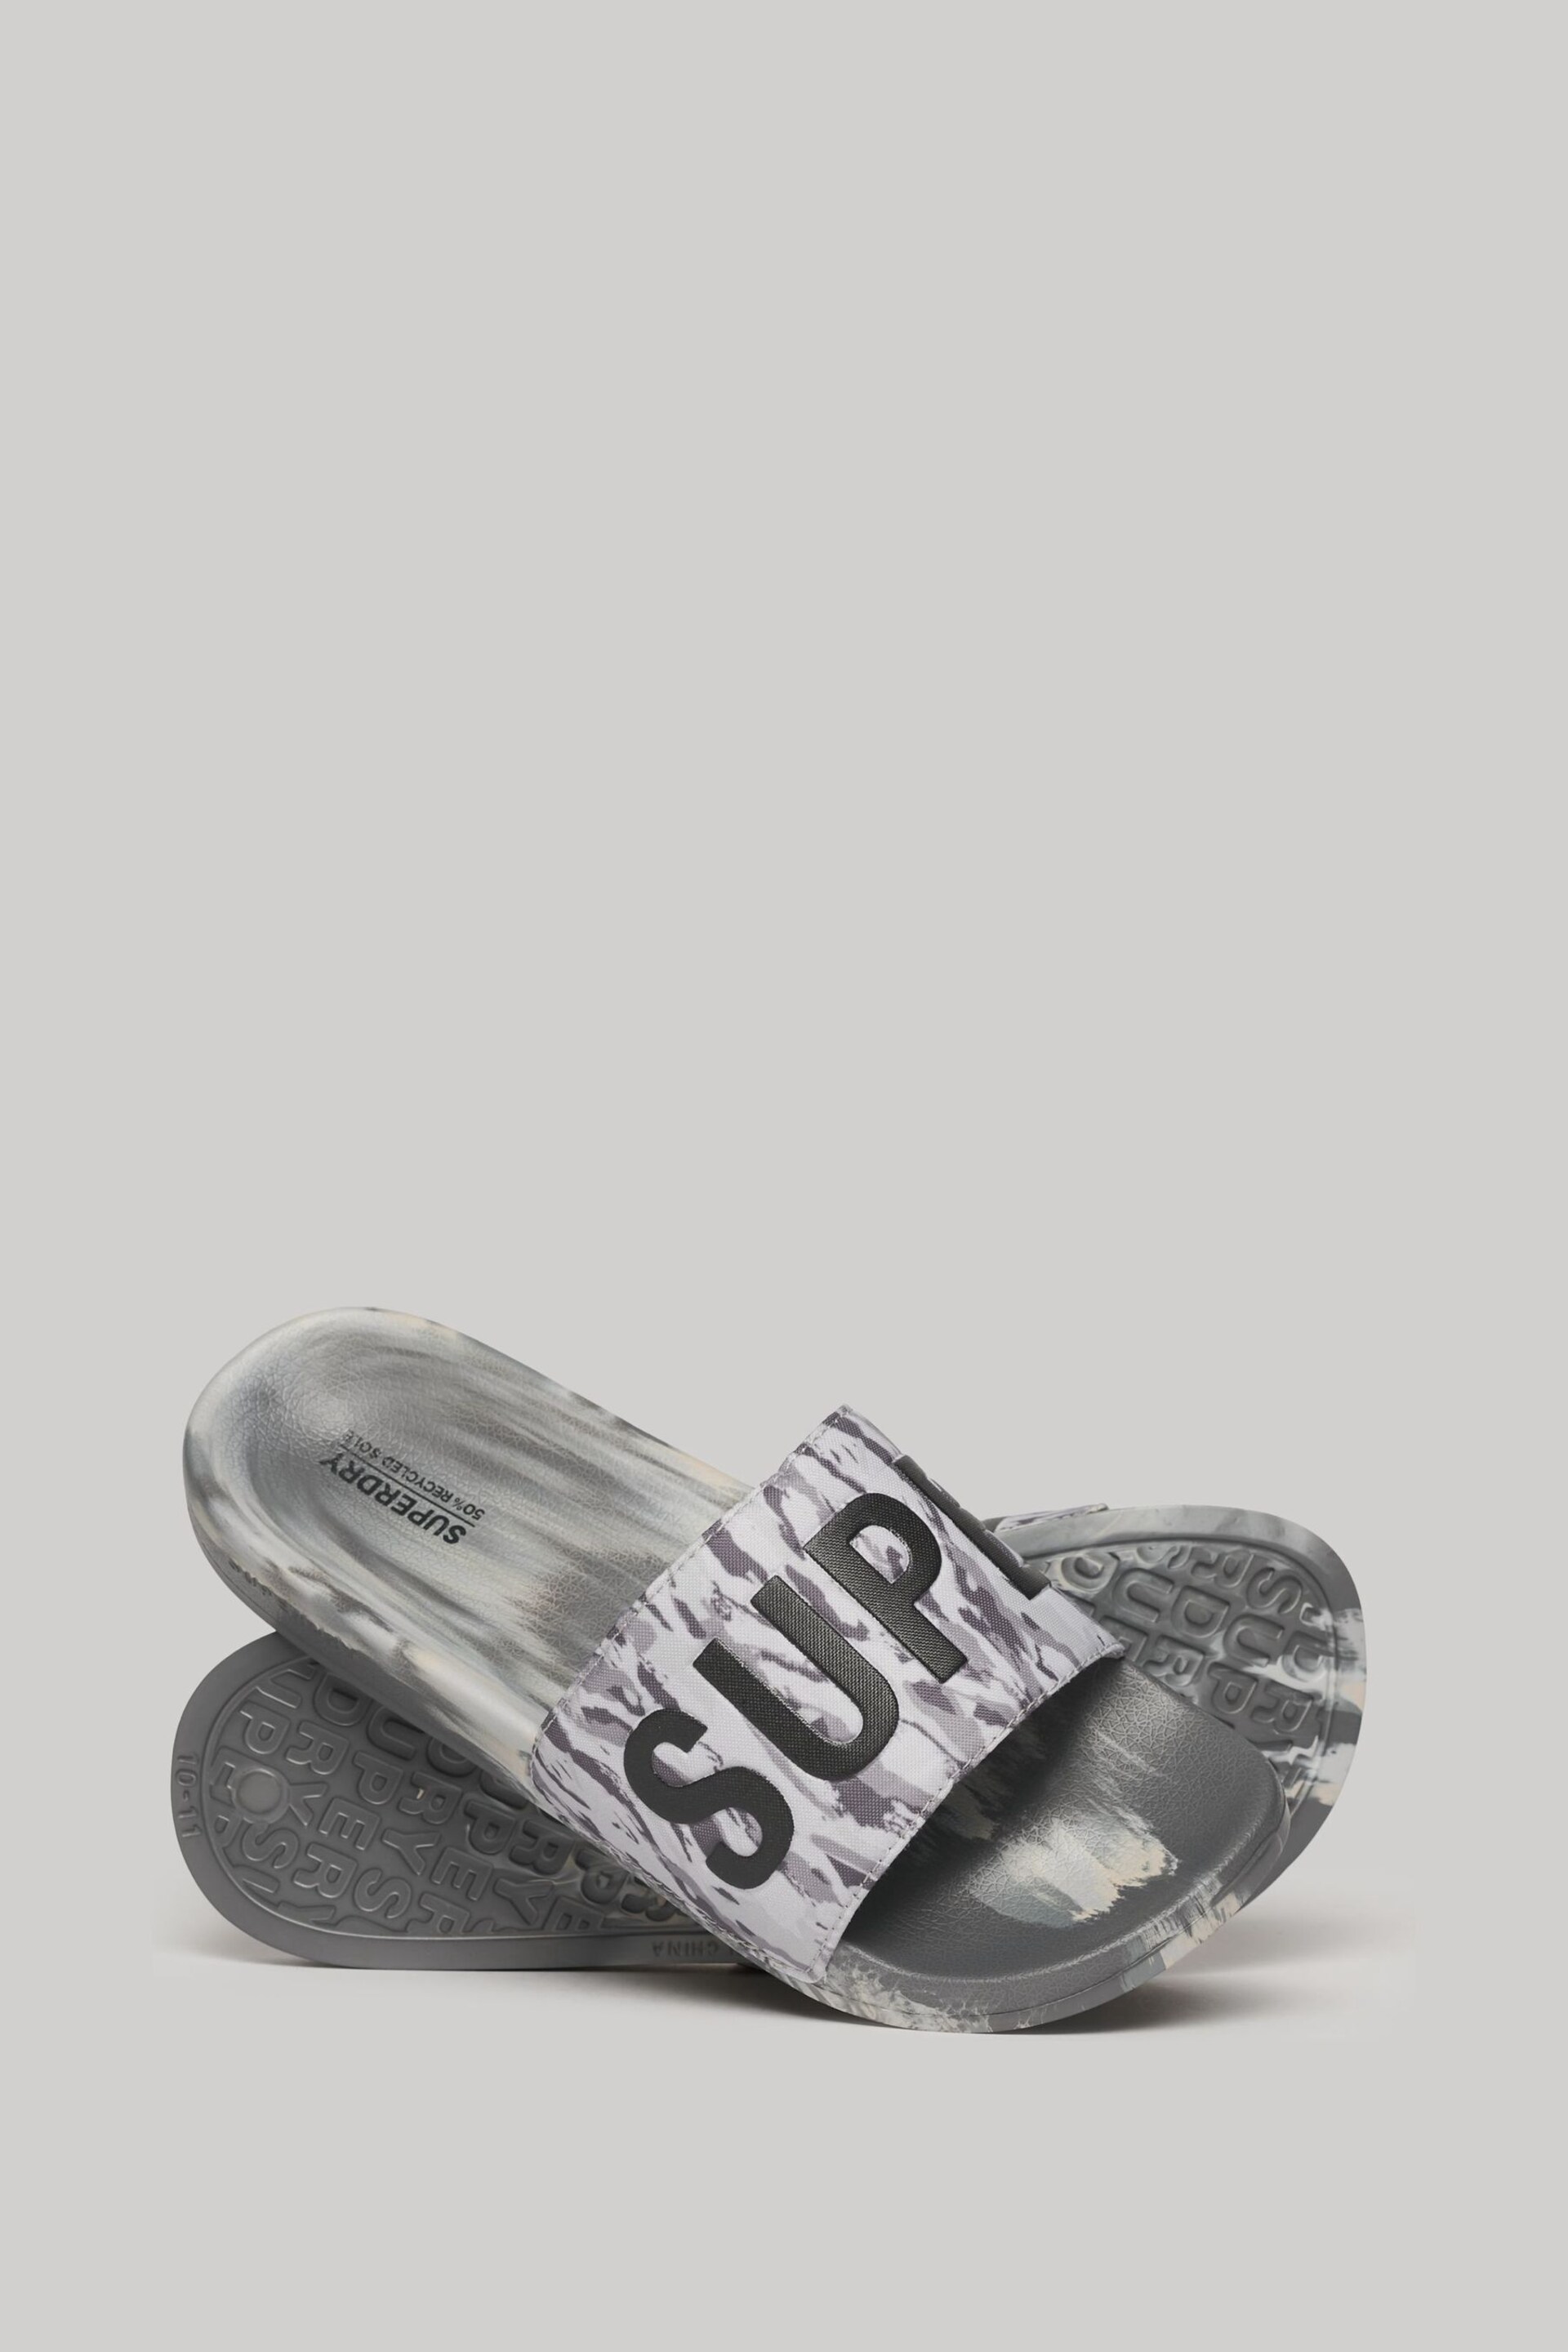 Superdry Grey Vegan Camo Pool Sliders - Image 1 of 4